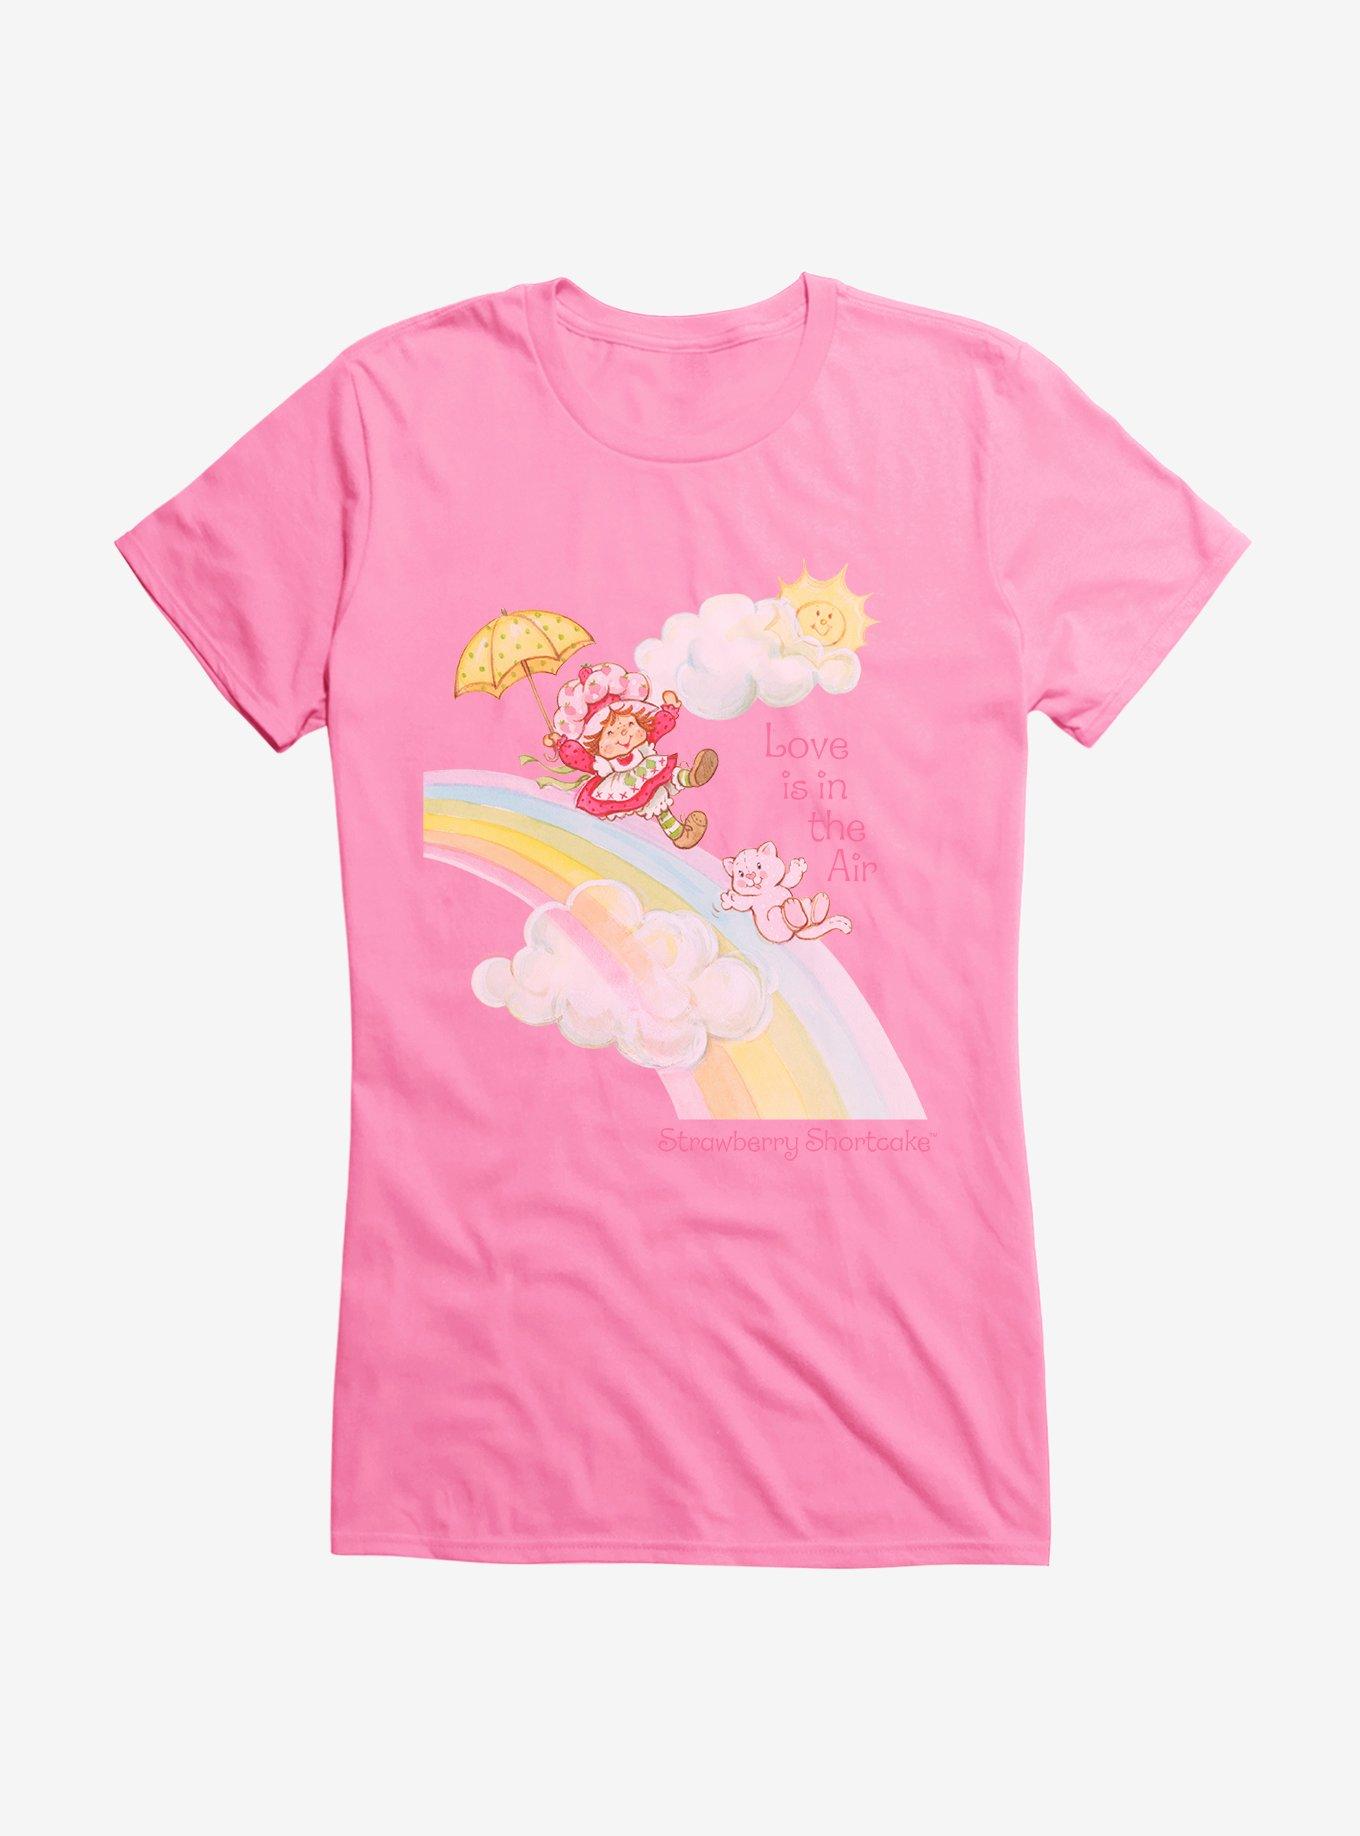 Strawberry Shortcake & Custard Love Is The Air Girls T-Shirt